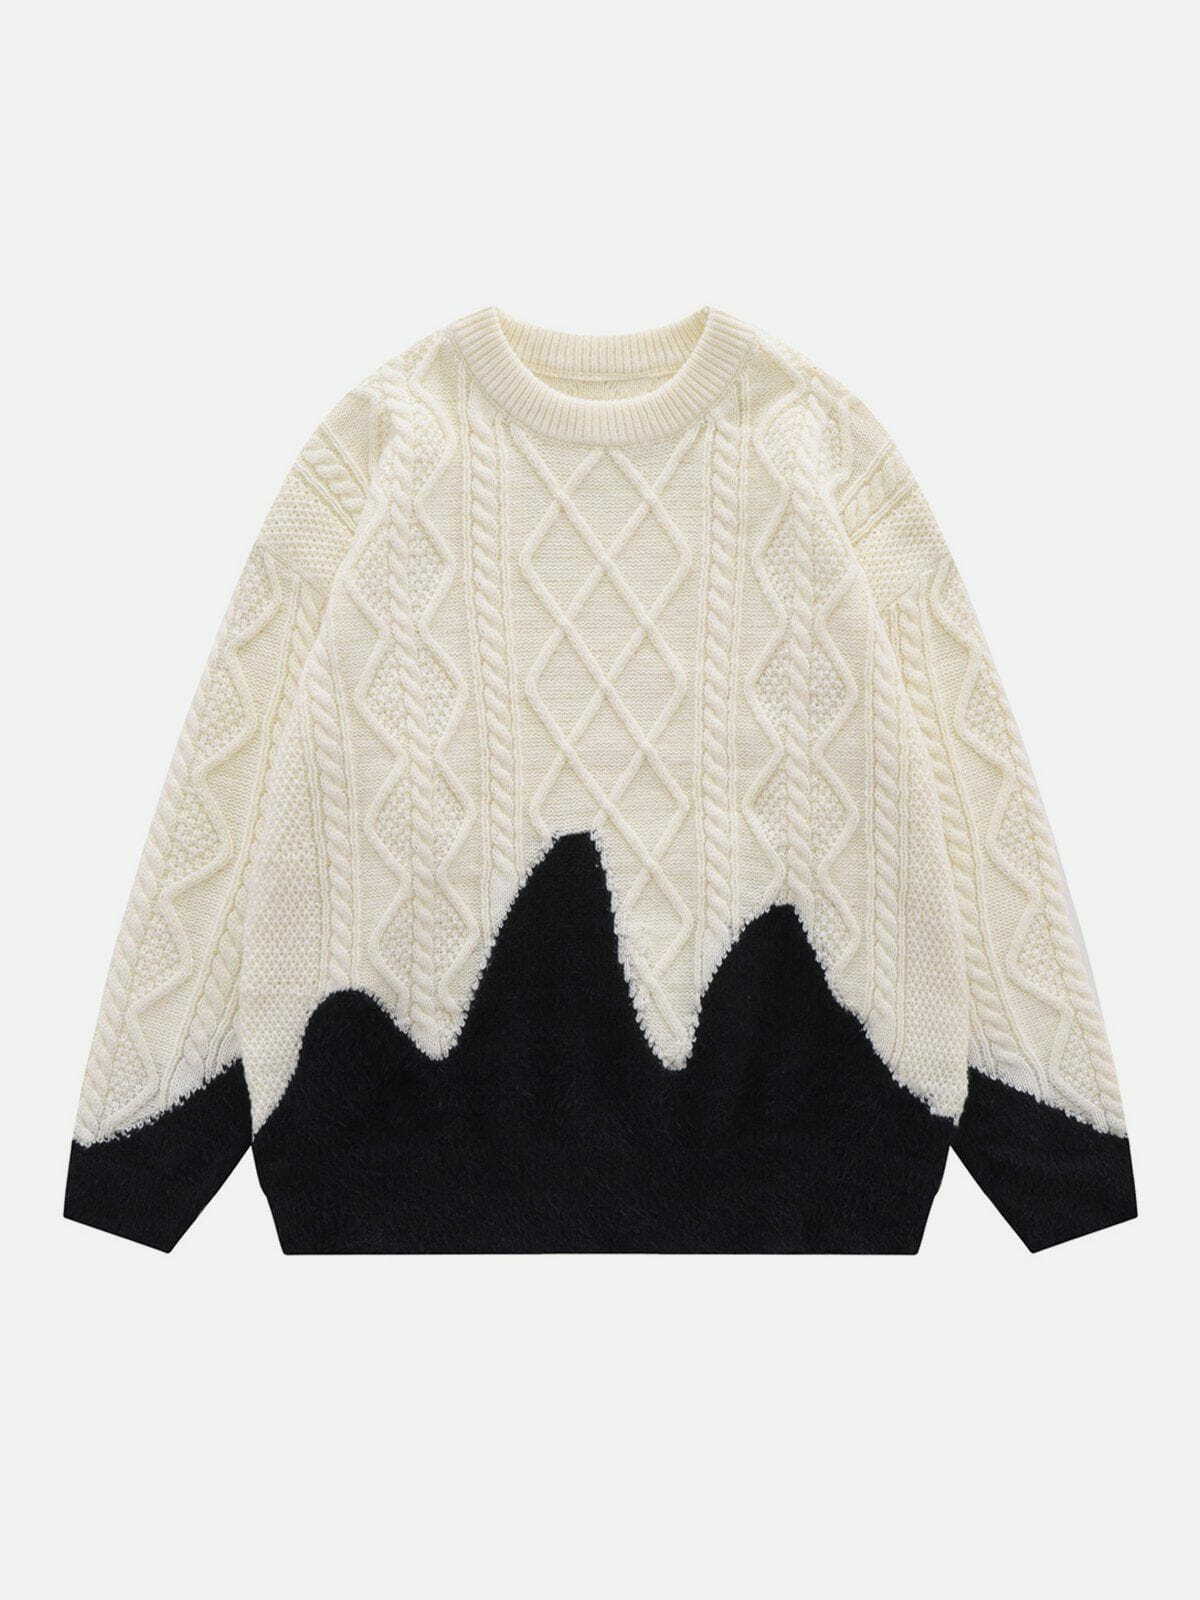 colorblock vintage sweater edgy y2k fashion icon 5424